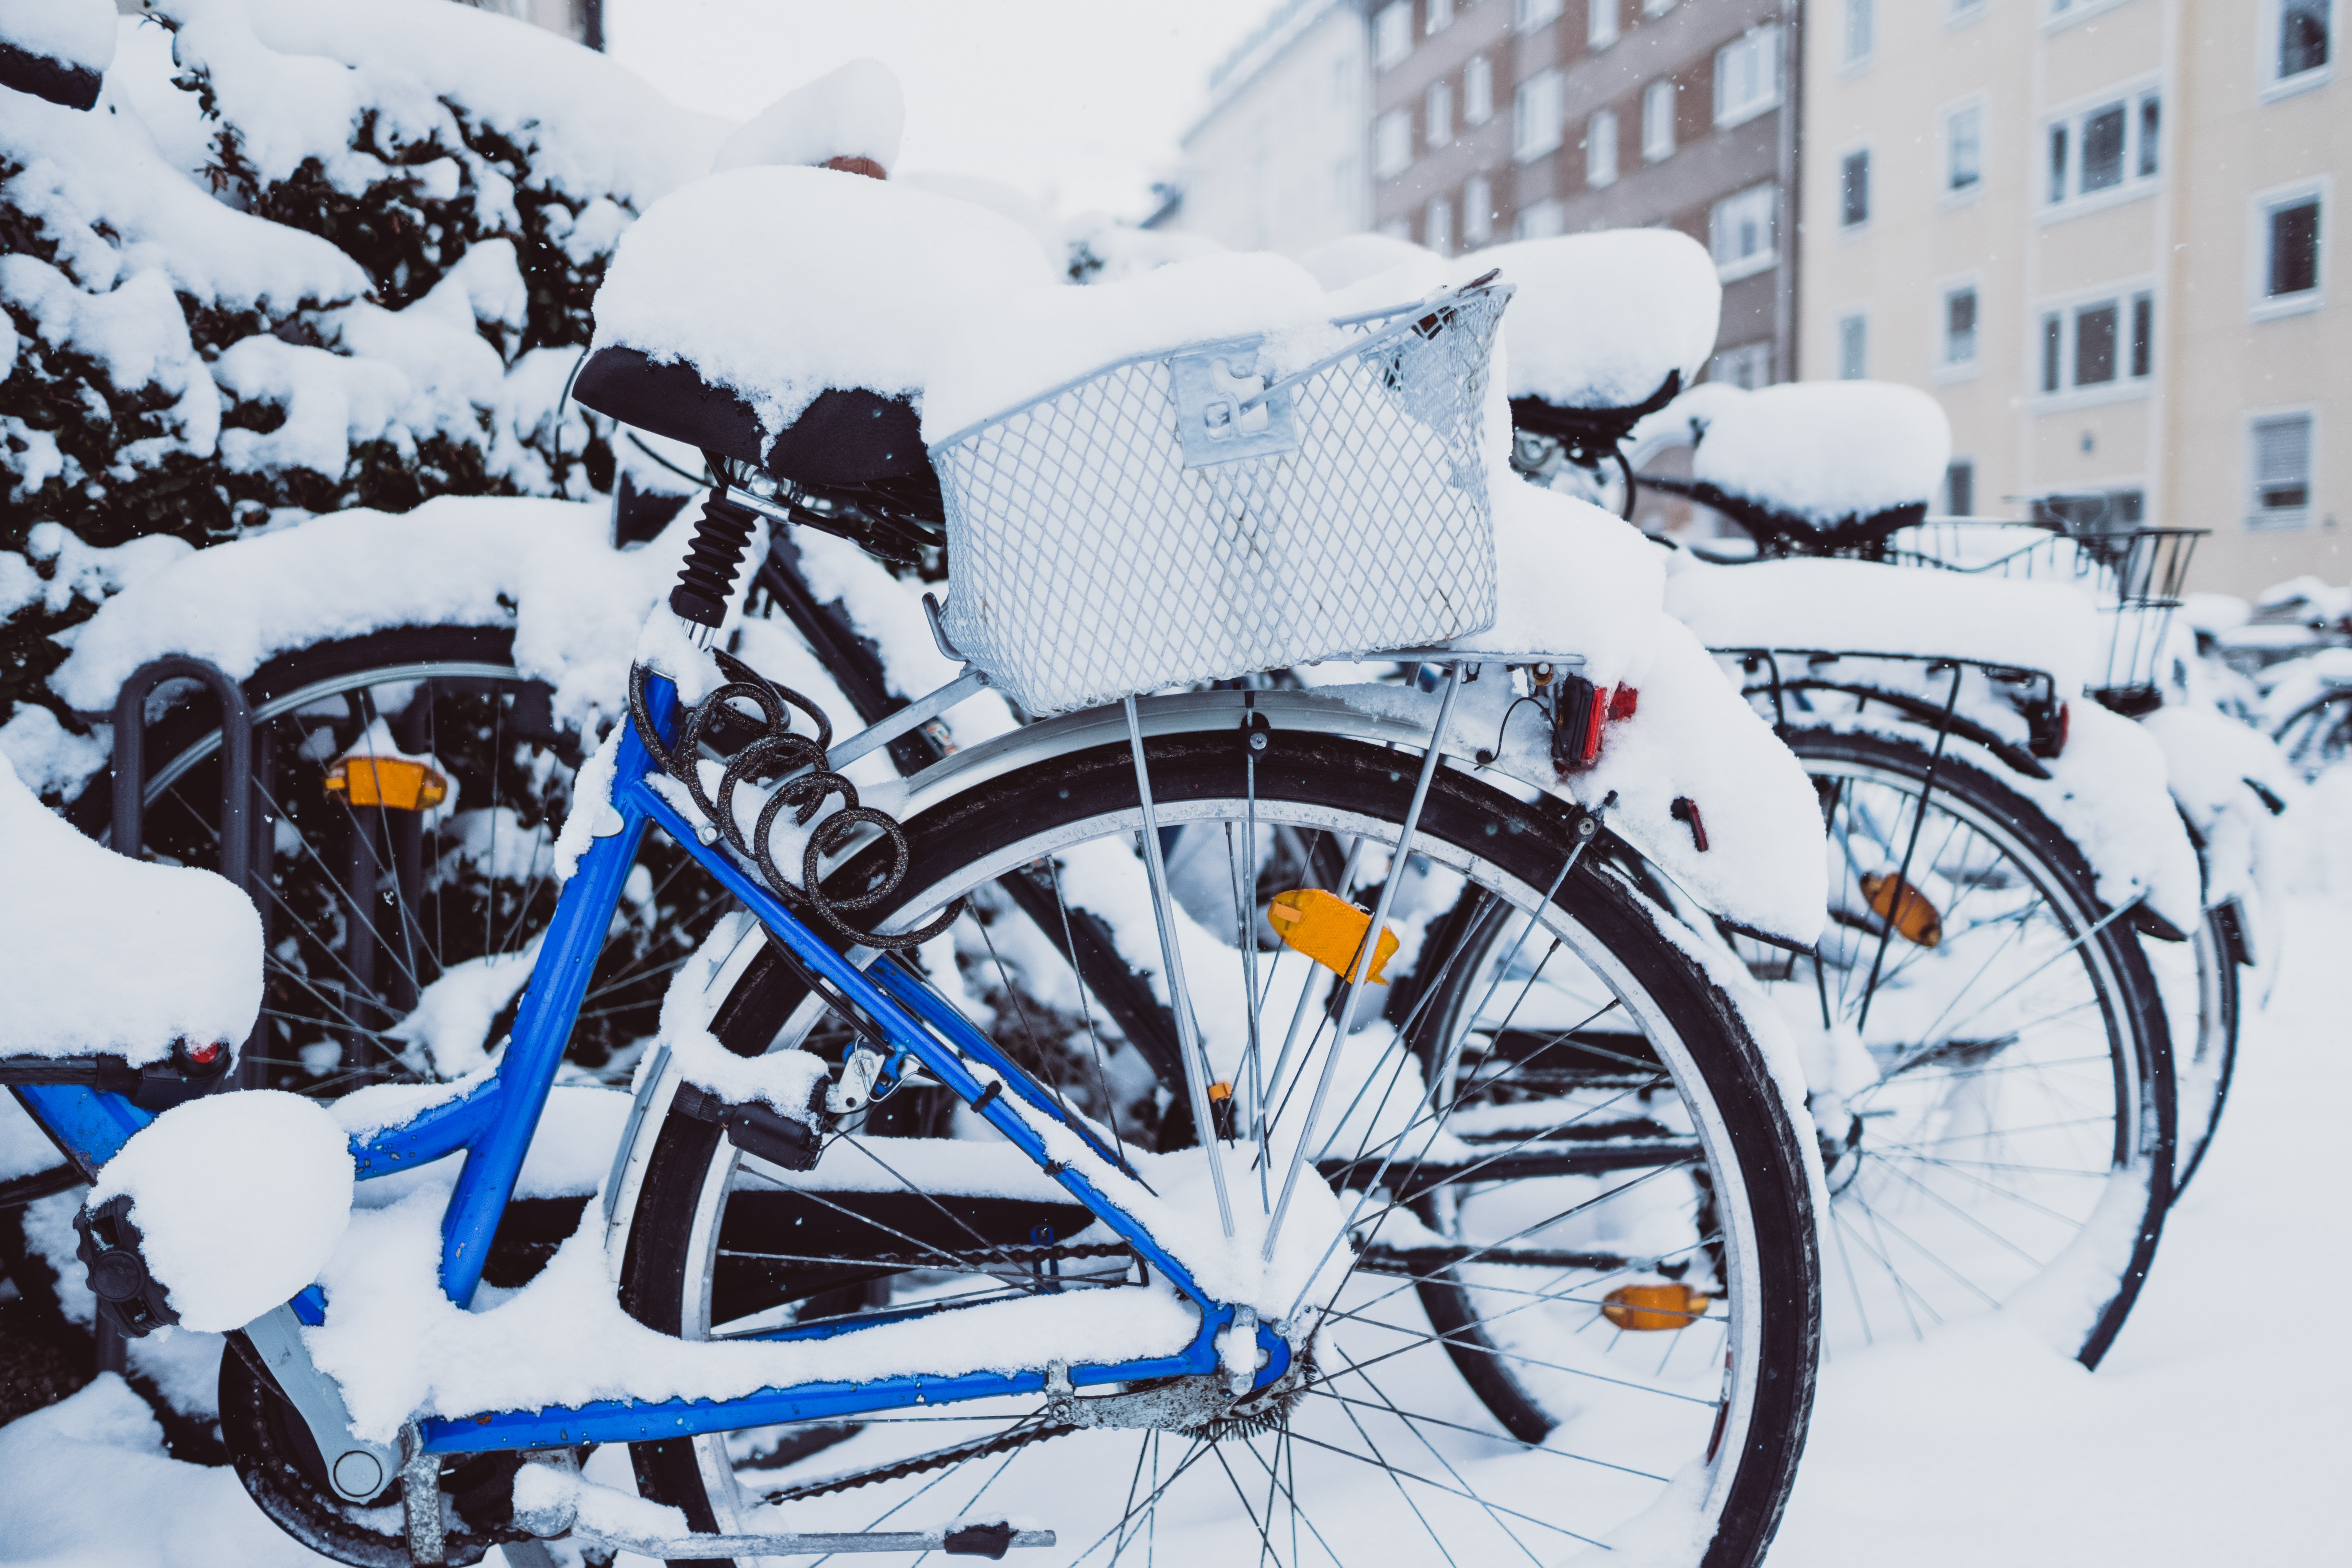 bicycles-in-snow-near-houses-2021-10-13-04-01-40-utc